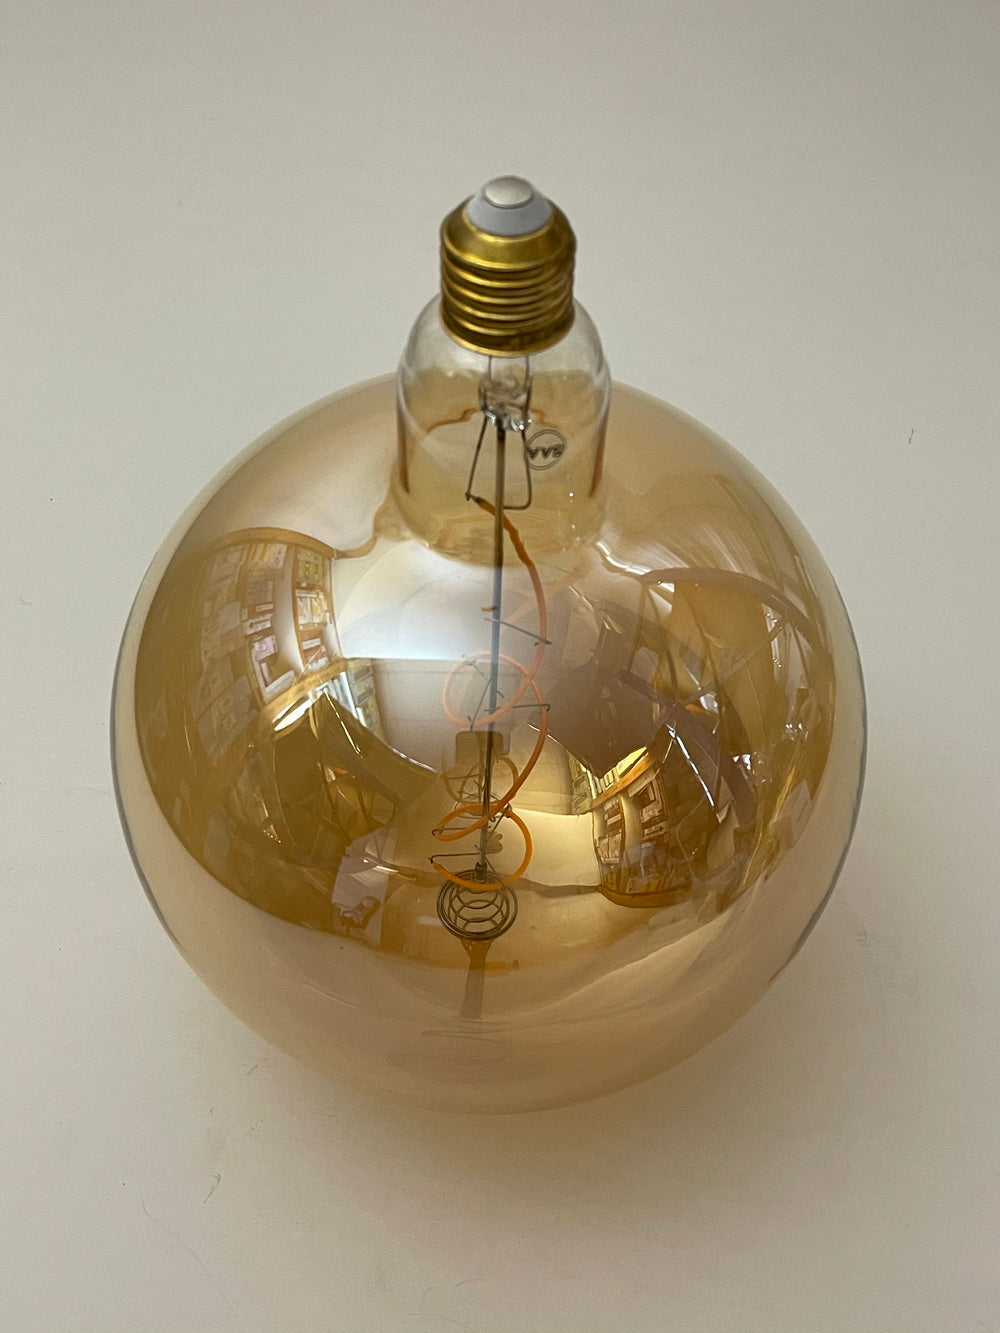 Brass Vintage LED Pendant Lights with Huge LED Globe Light Bulb Warm Light 4W E27